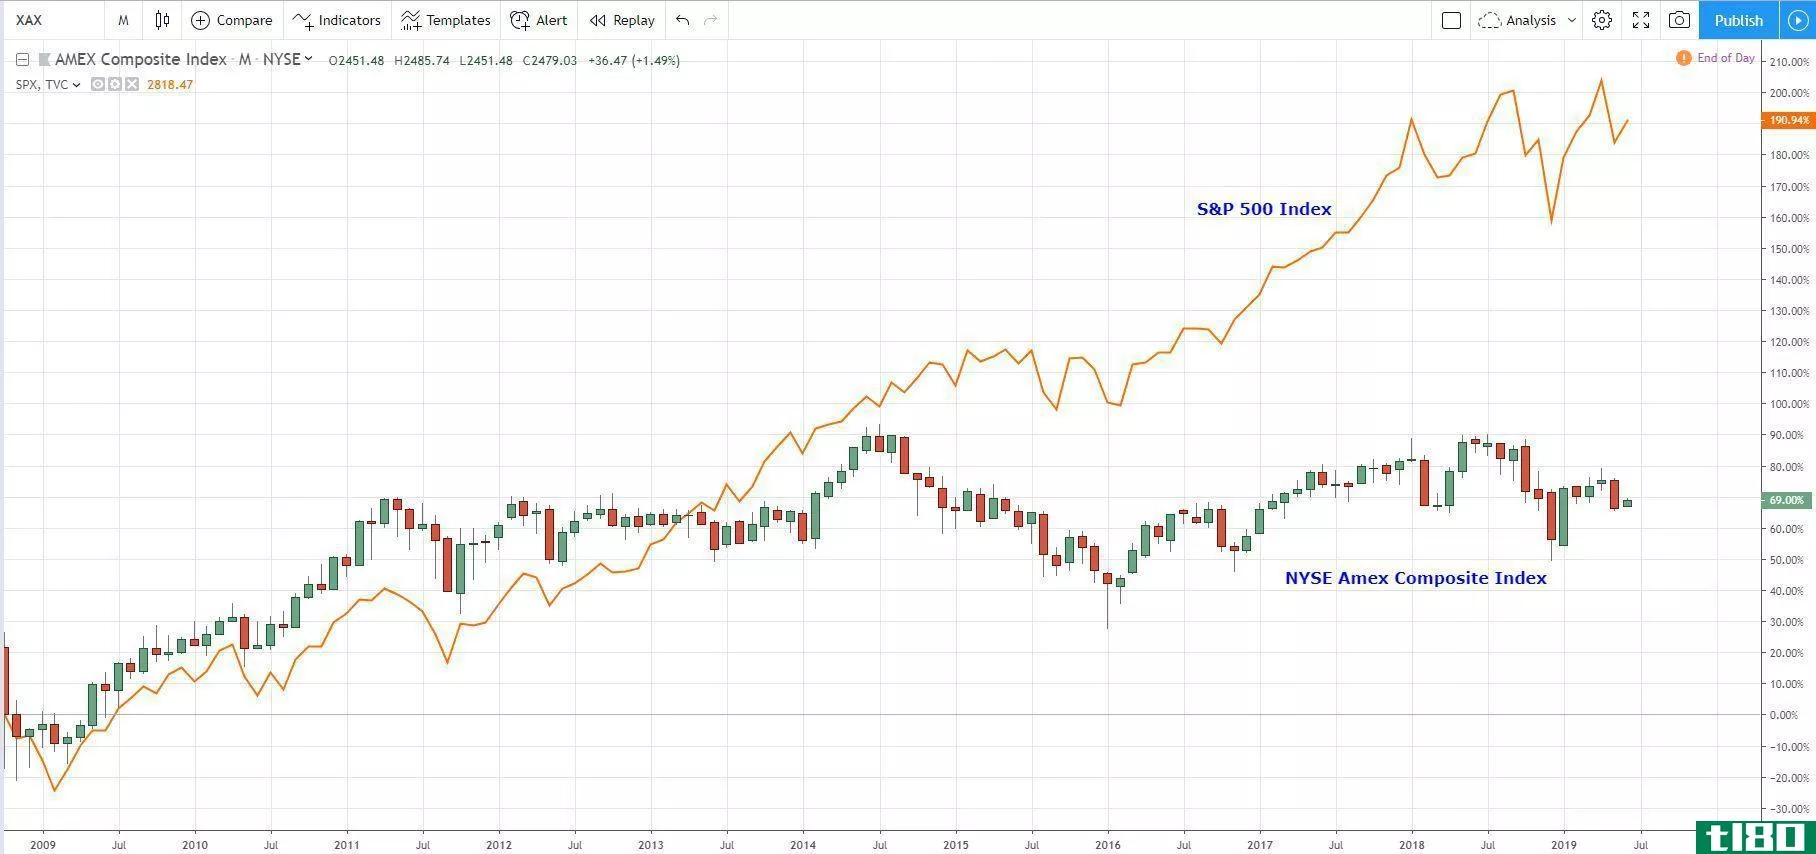 NYSE Amex Composite Index Versus S&P 500 Index monthly chart